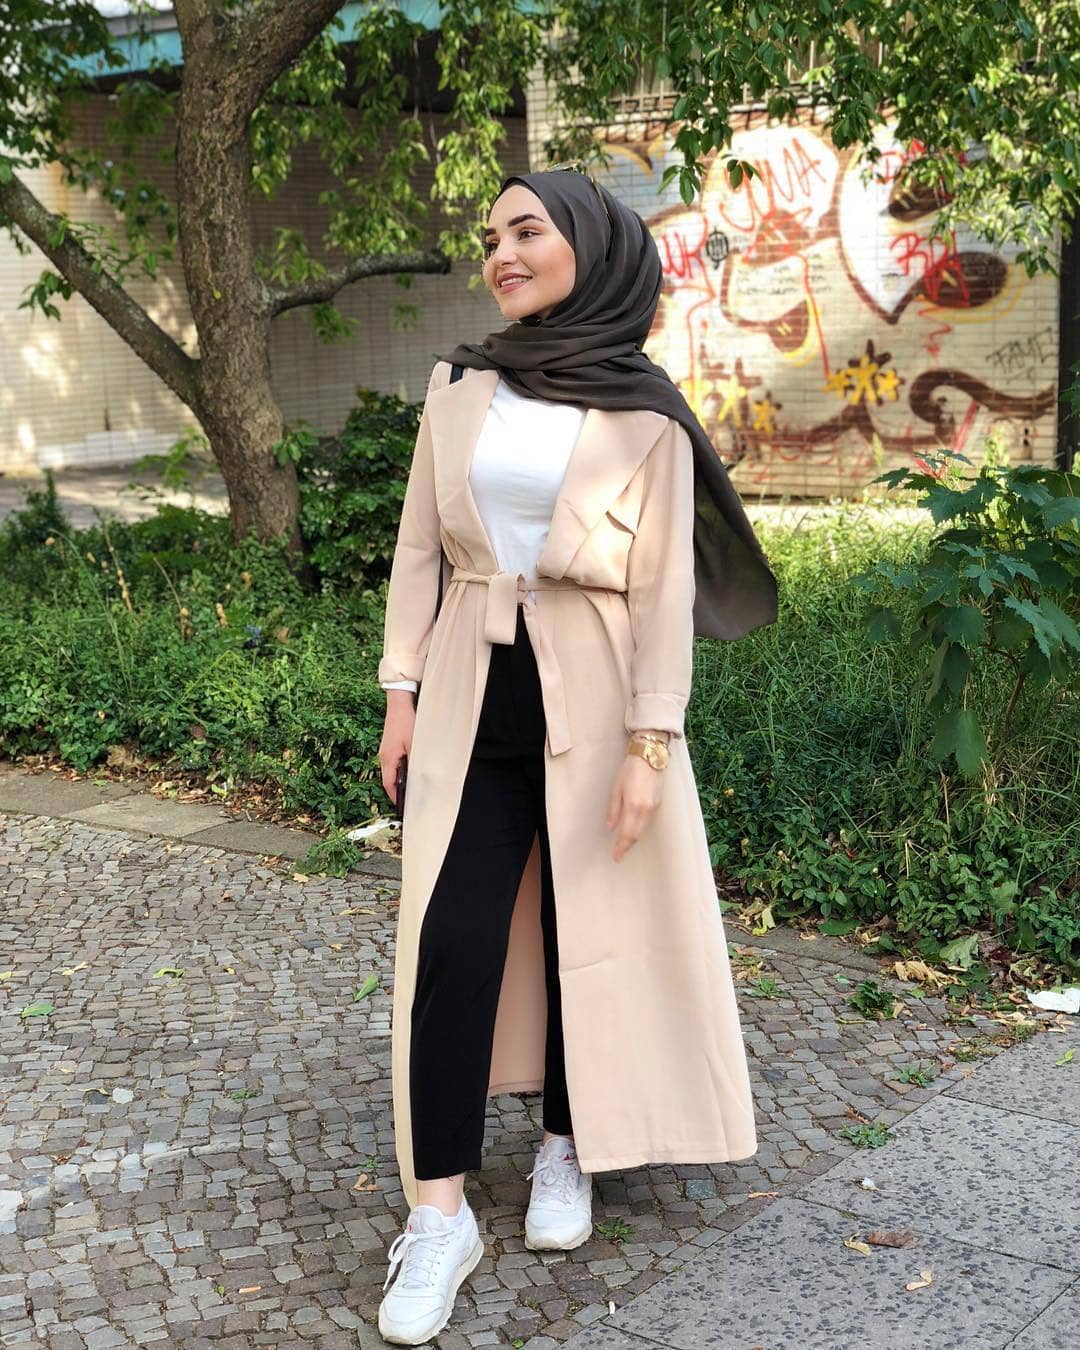  Hijab Moderne 2019 Hijab Style Hiver Hijab Fashion and 